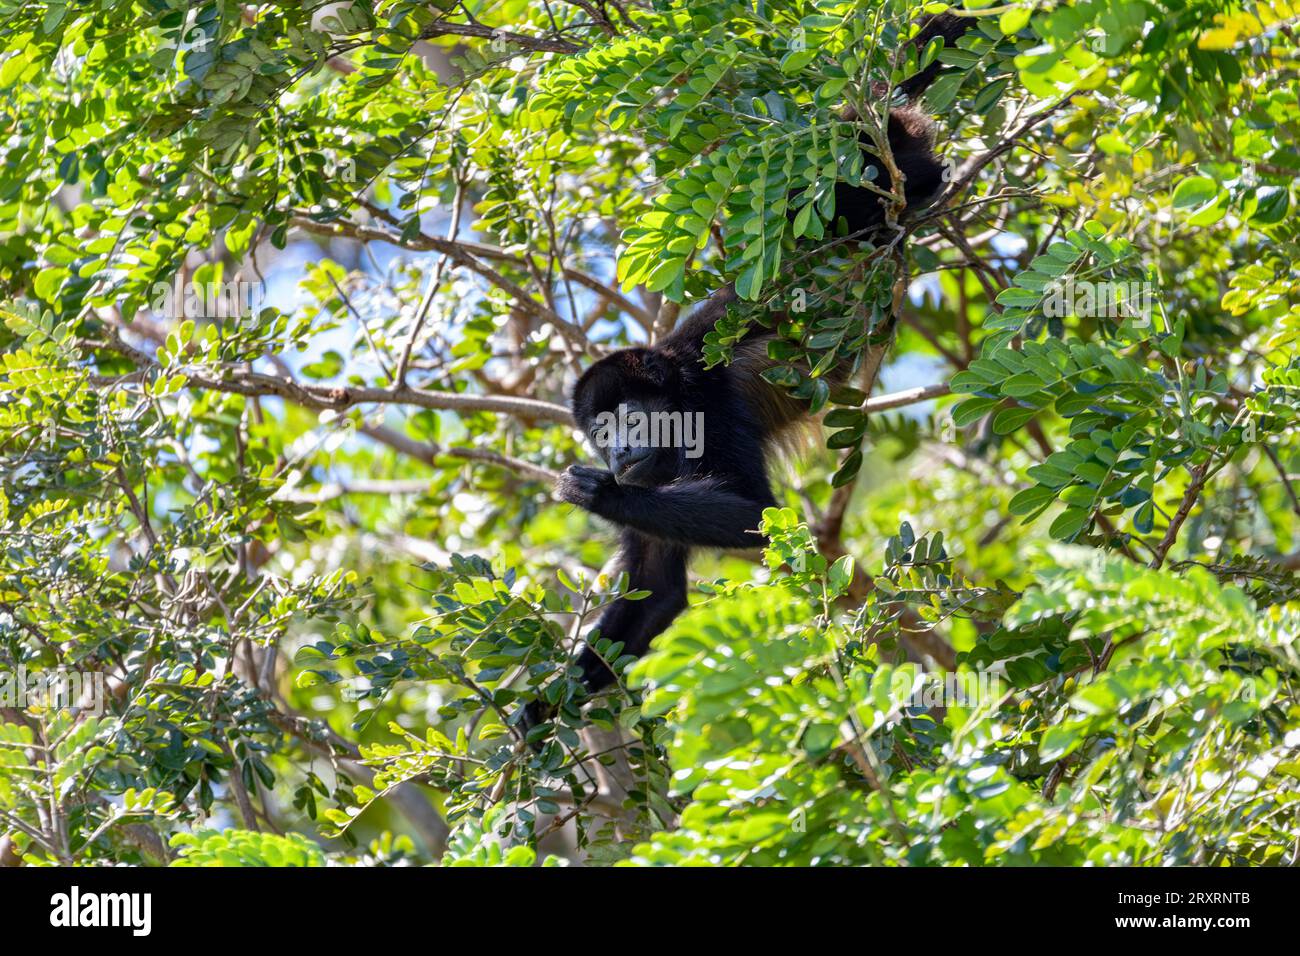 Mangelheuler (Alouatta palliata) oder goldgelber heulender Affe, der sich am Baum ernährt, Fluss Rio Bebedero Guanacaste, Costa Rica Stockfoto